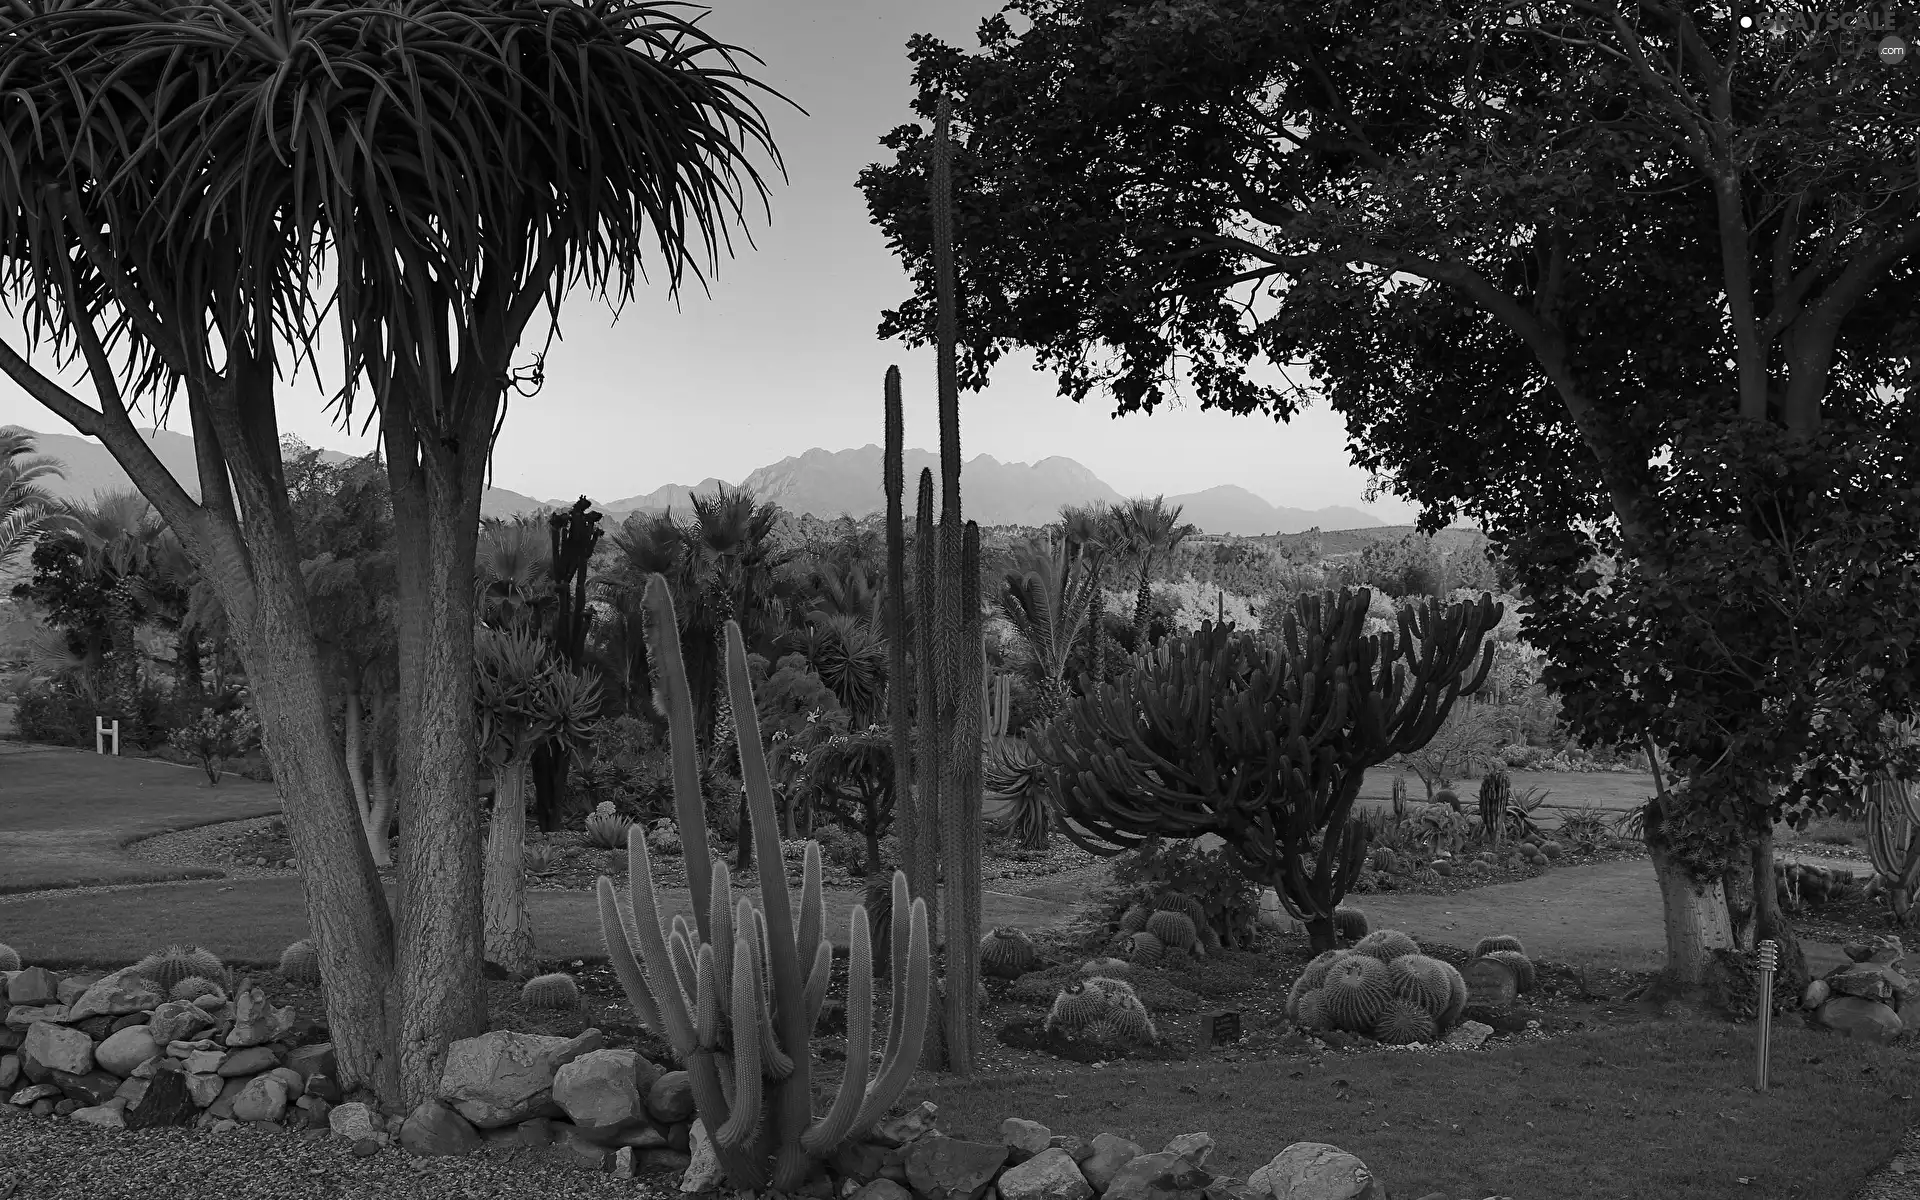 Park, trees, viewes, Cactus